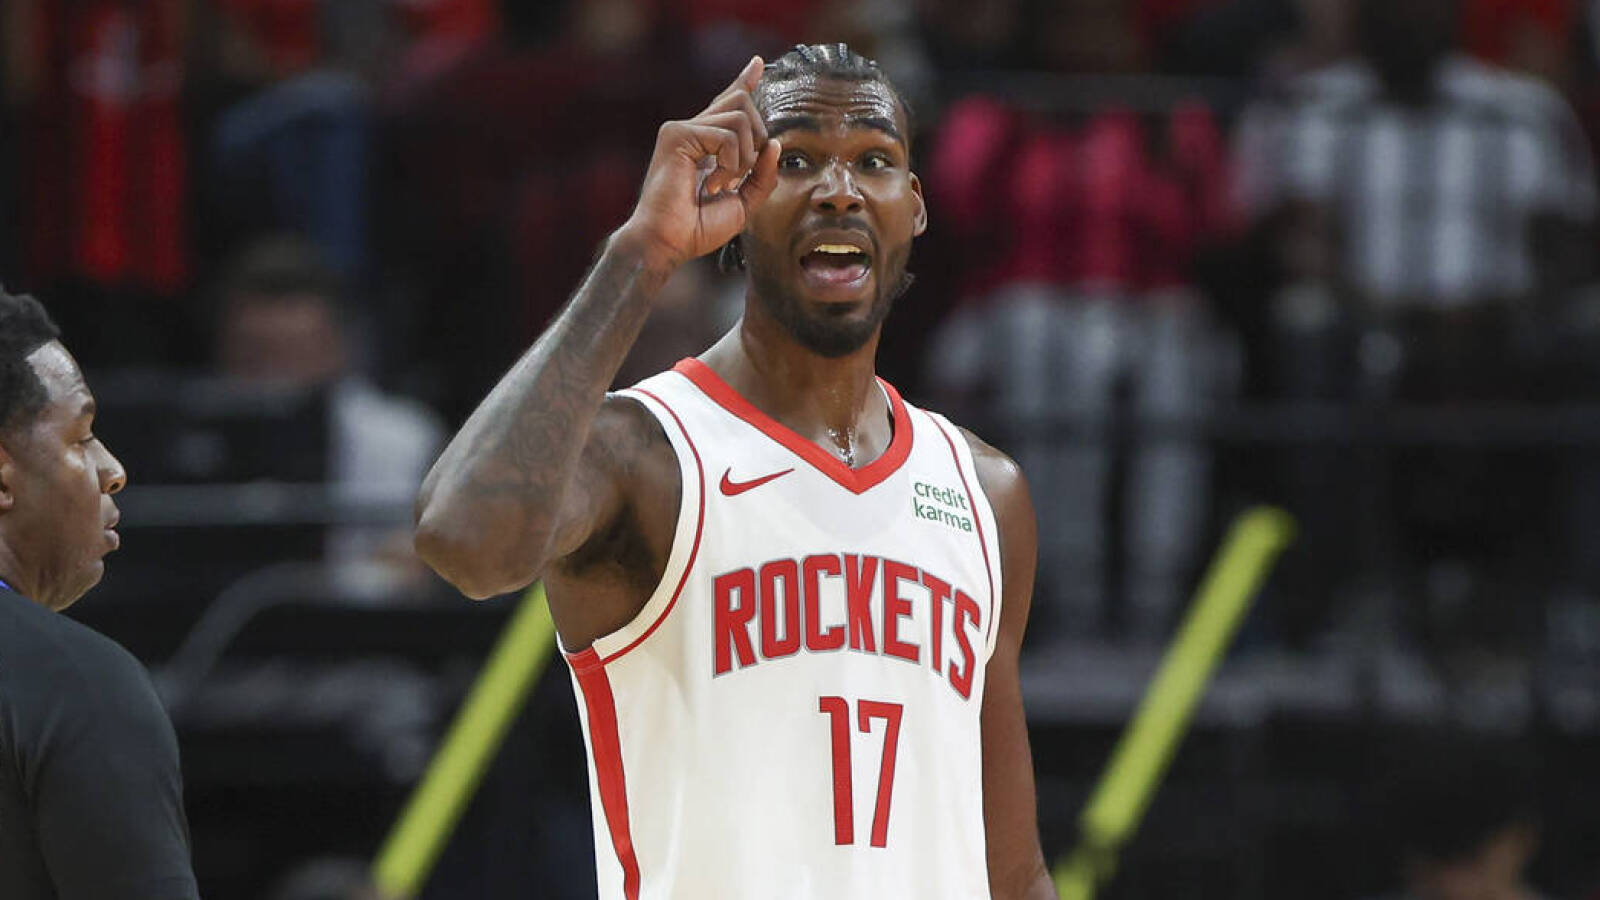 Watch: Rockets forward trash talks Warriors amid heated standings battle